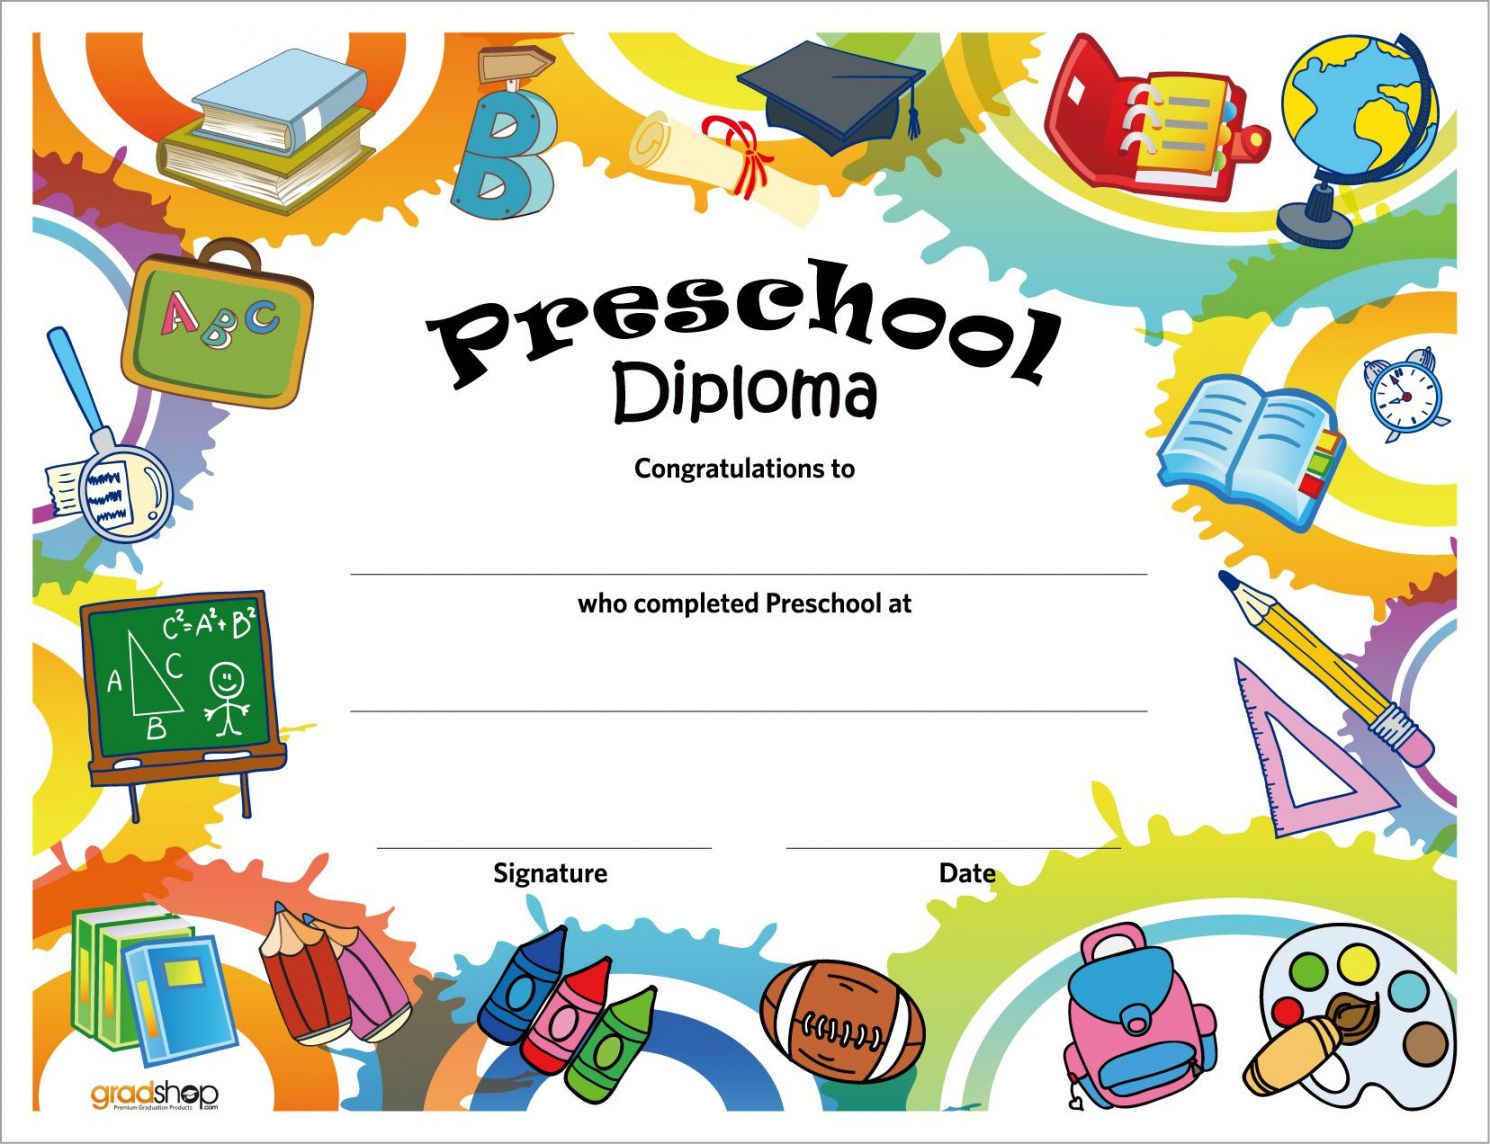 Pre Kindergarten Certificate Template